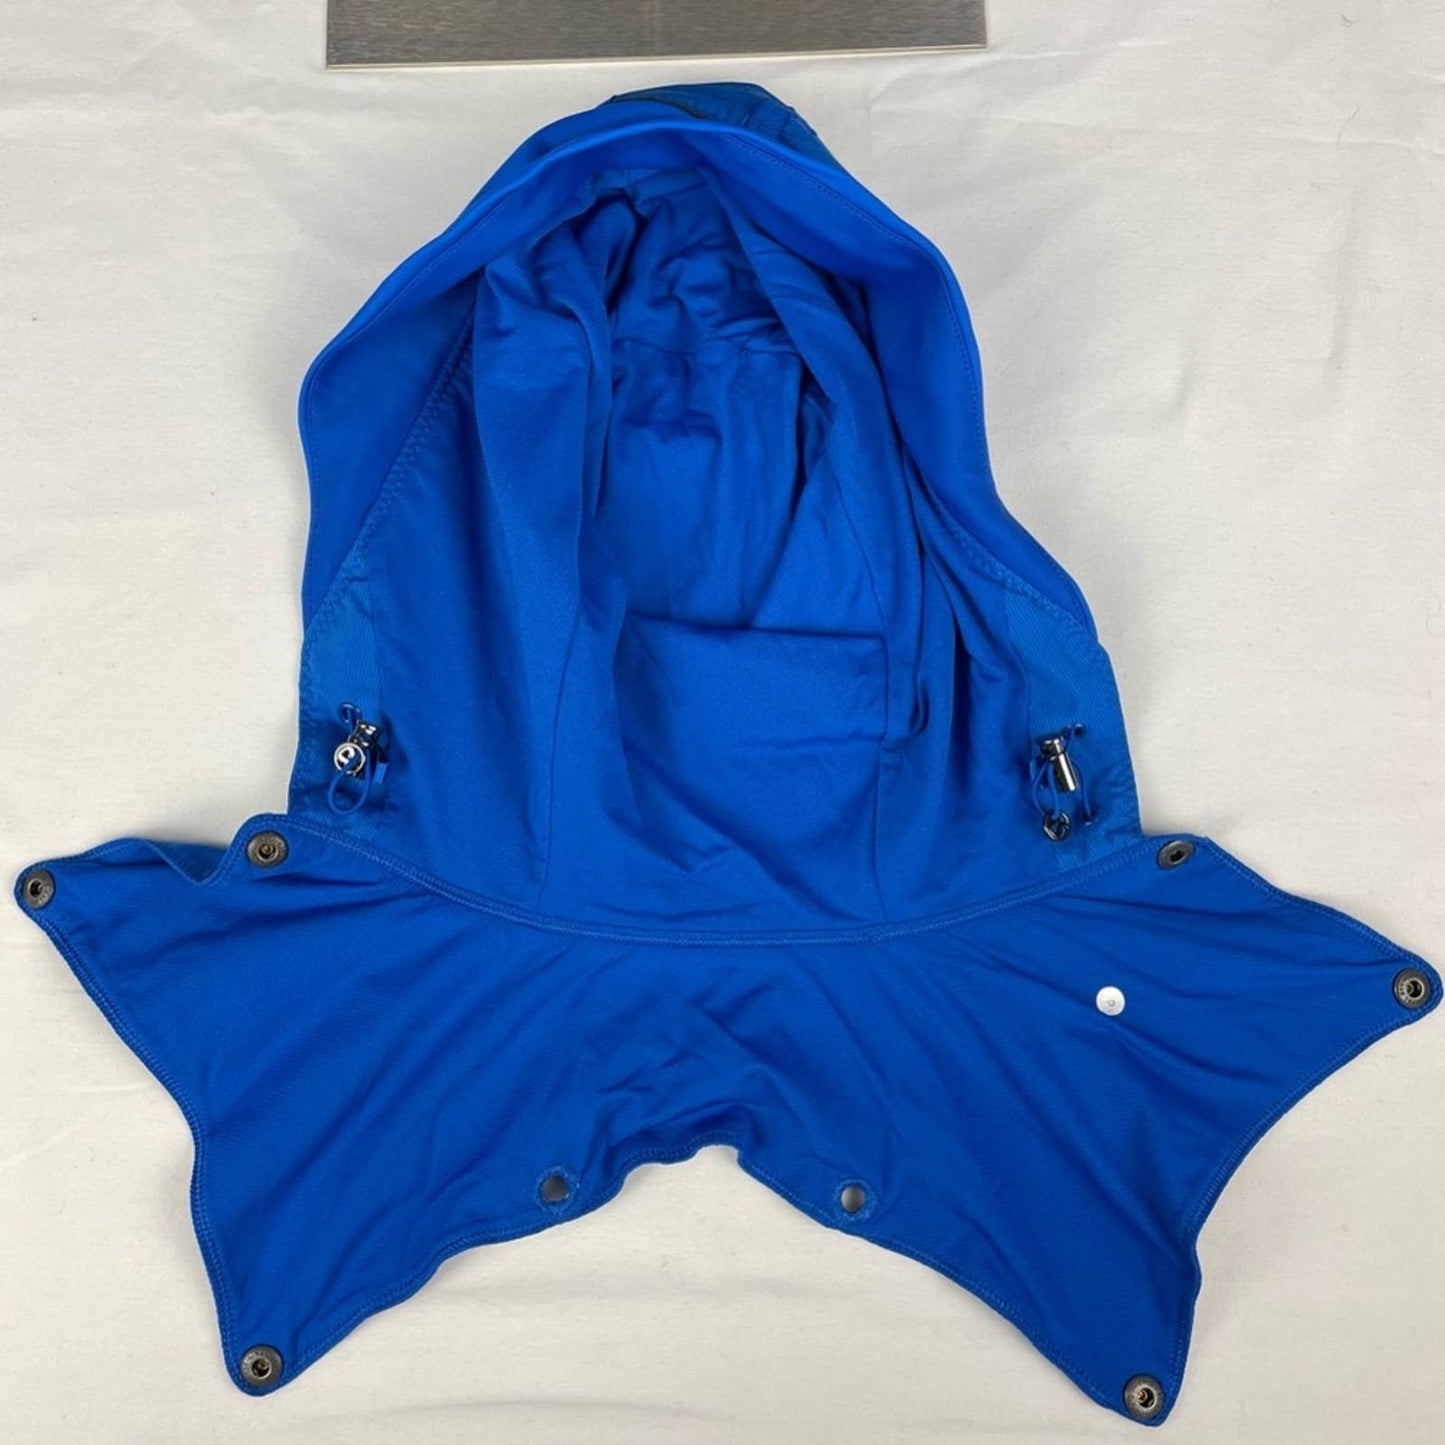 Lululemon Run Bandit Jacket Baroque Blue Removable Hood Running Utility Coat Size 6